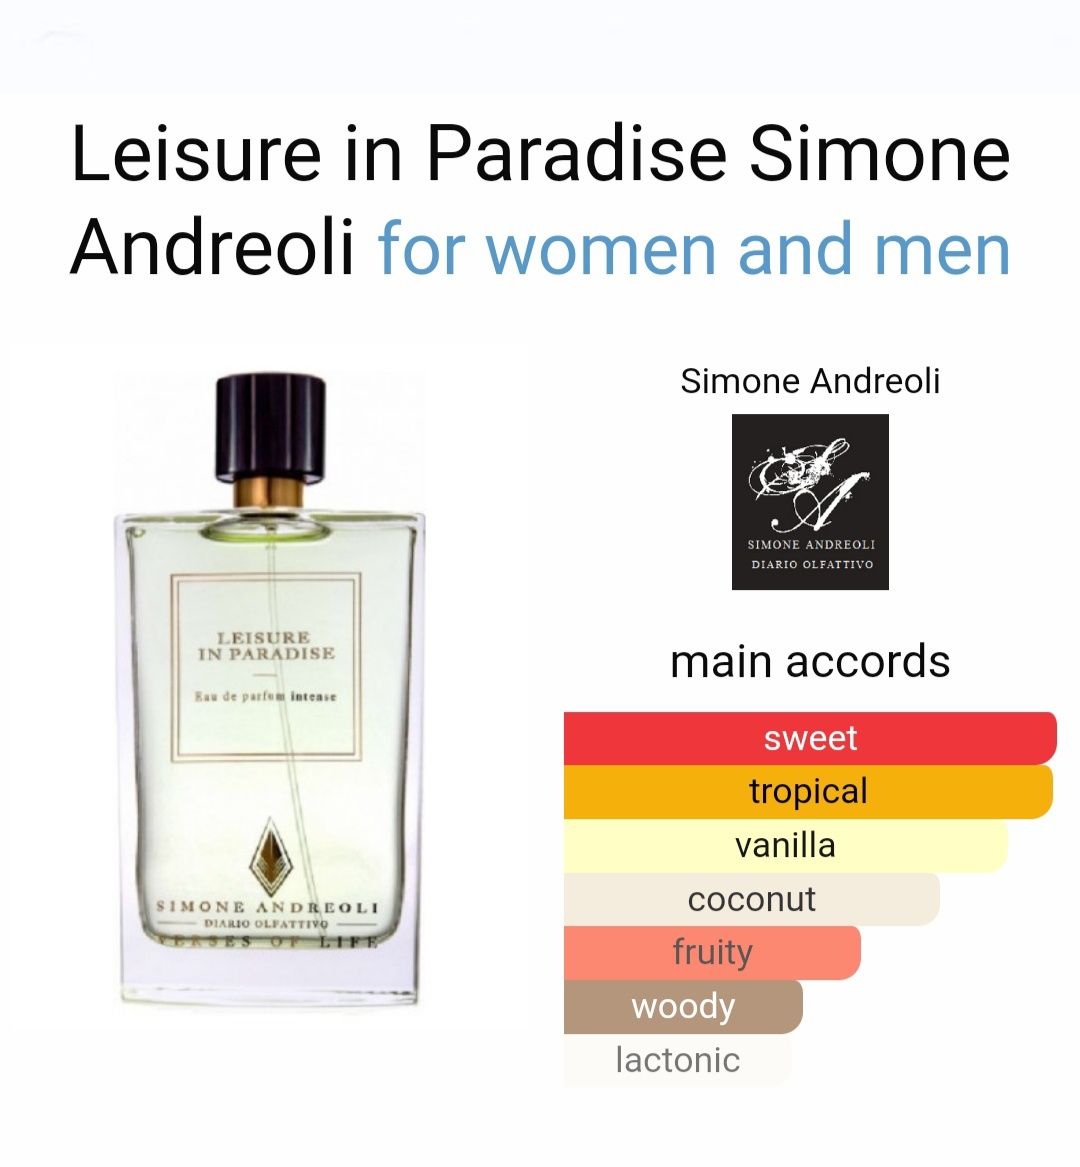 Leisure in paradise Simone Andreoli